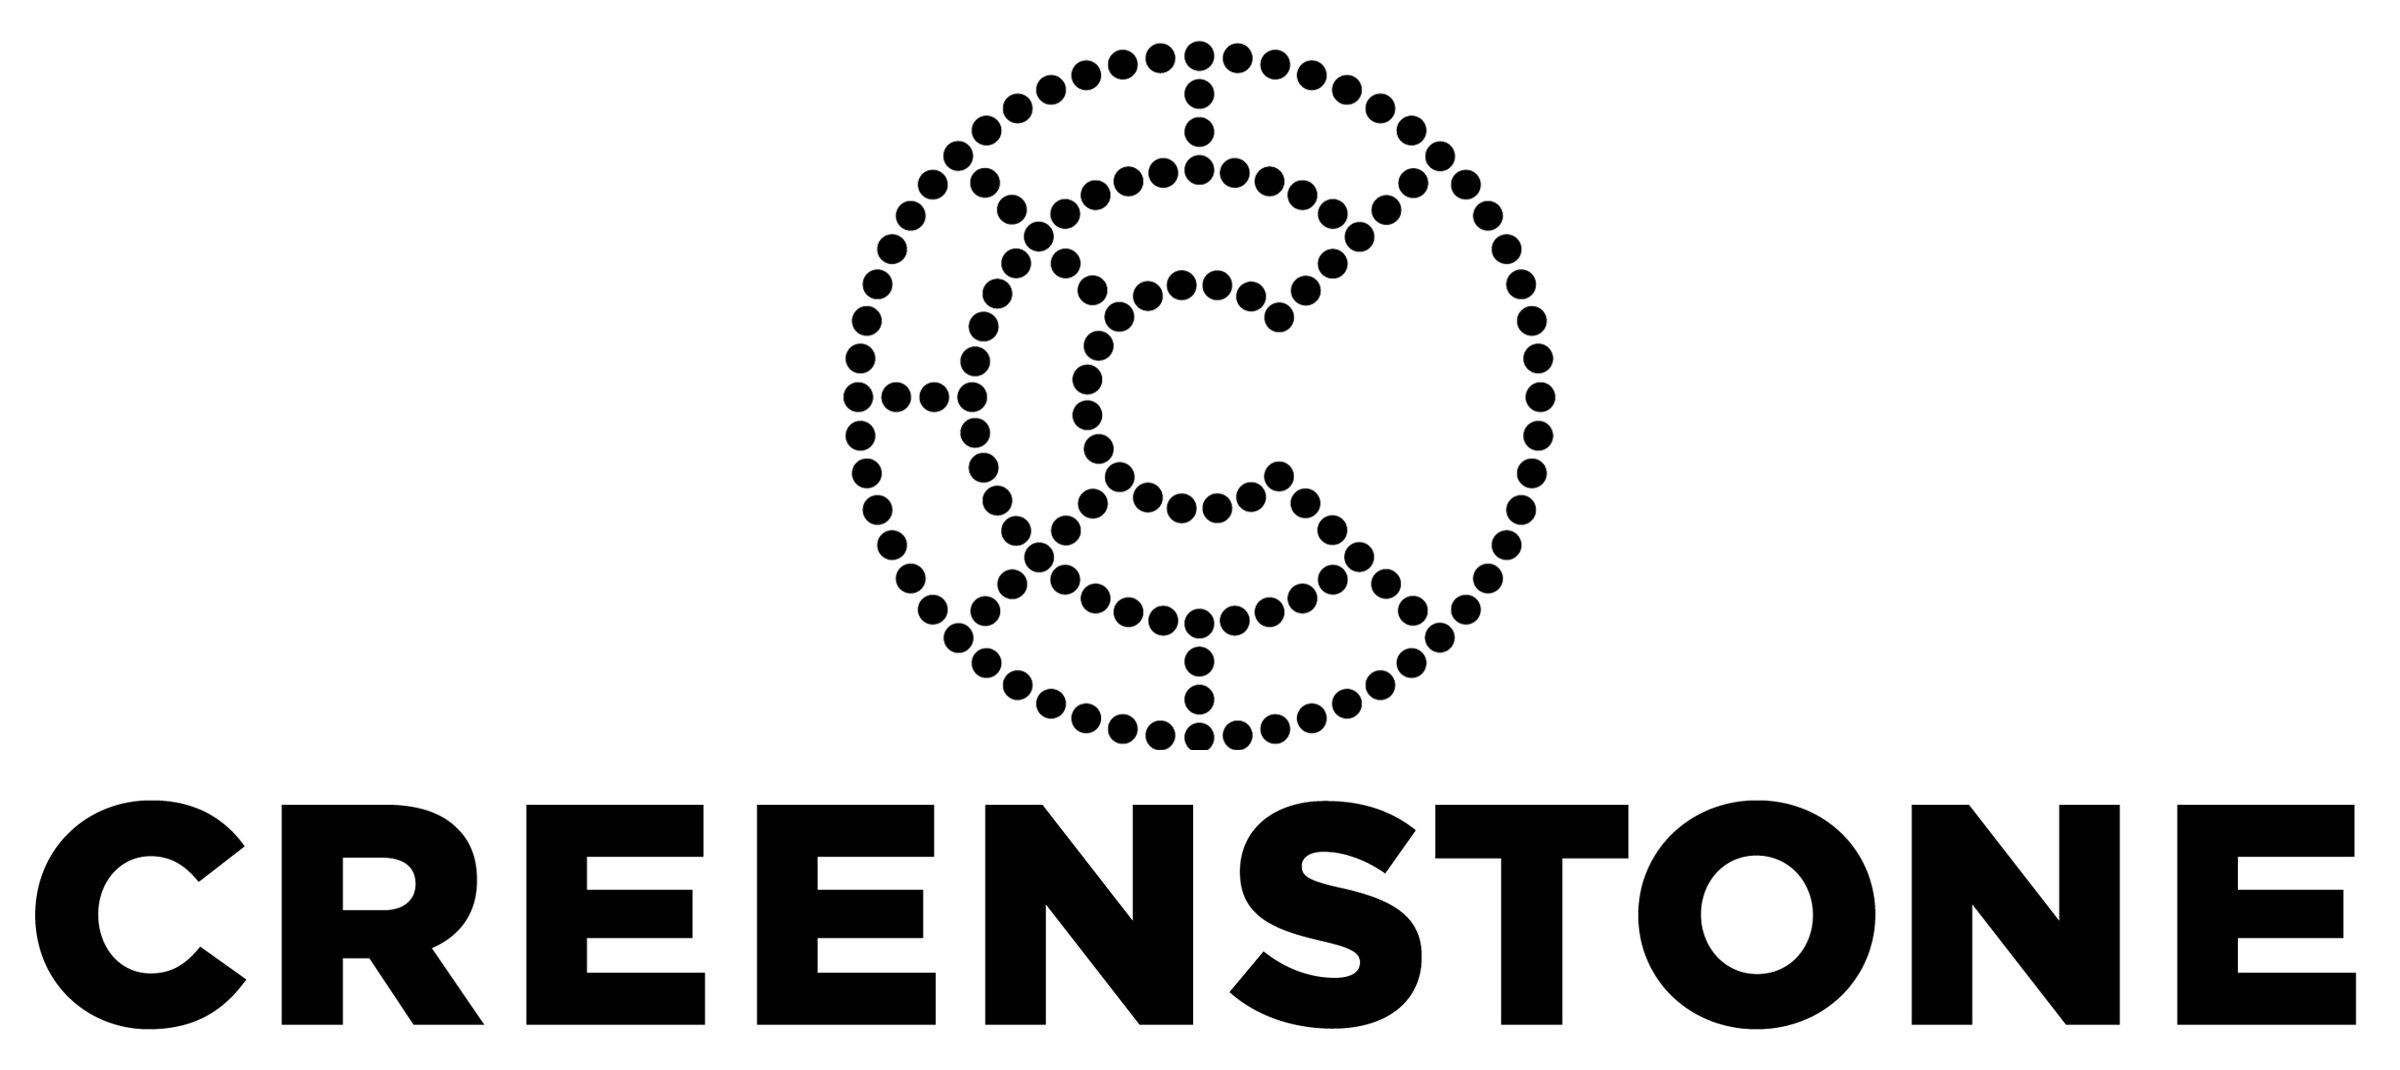 Creenstone - logo